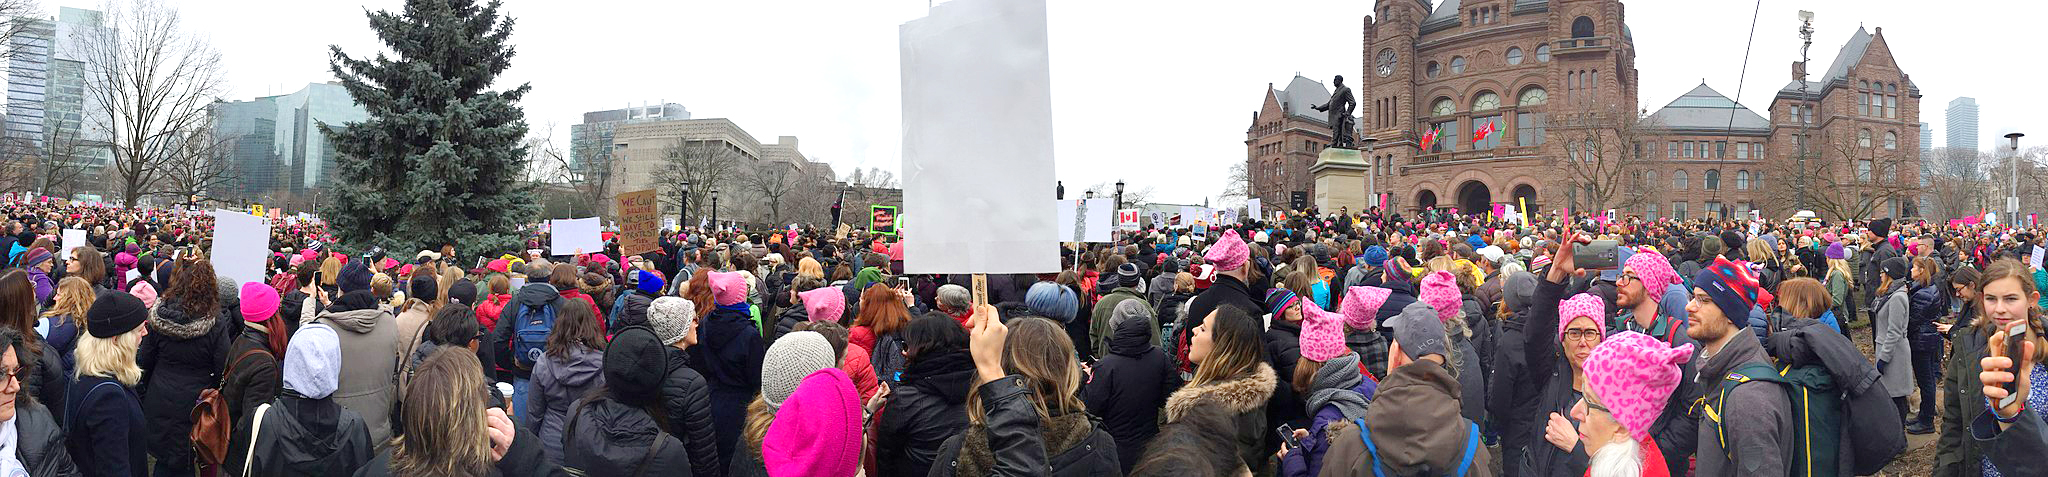 Toronto Women's March image